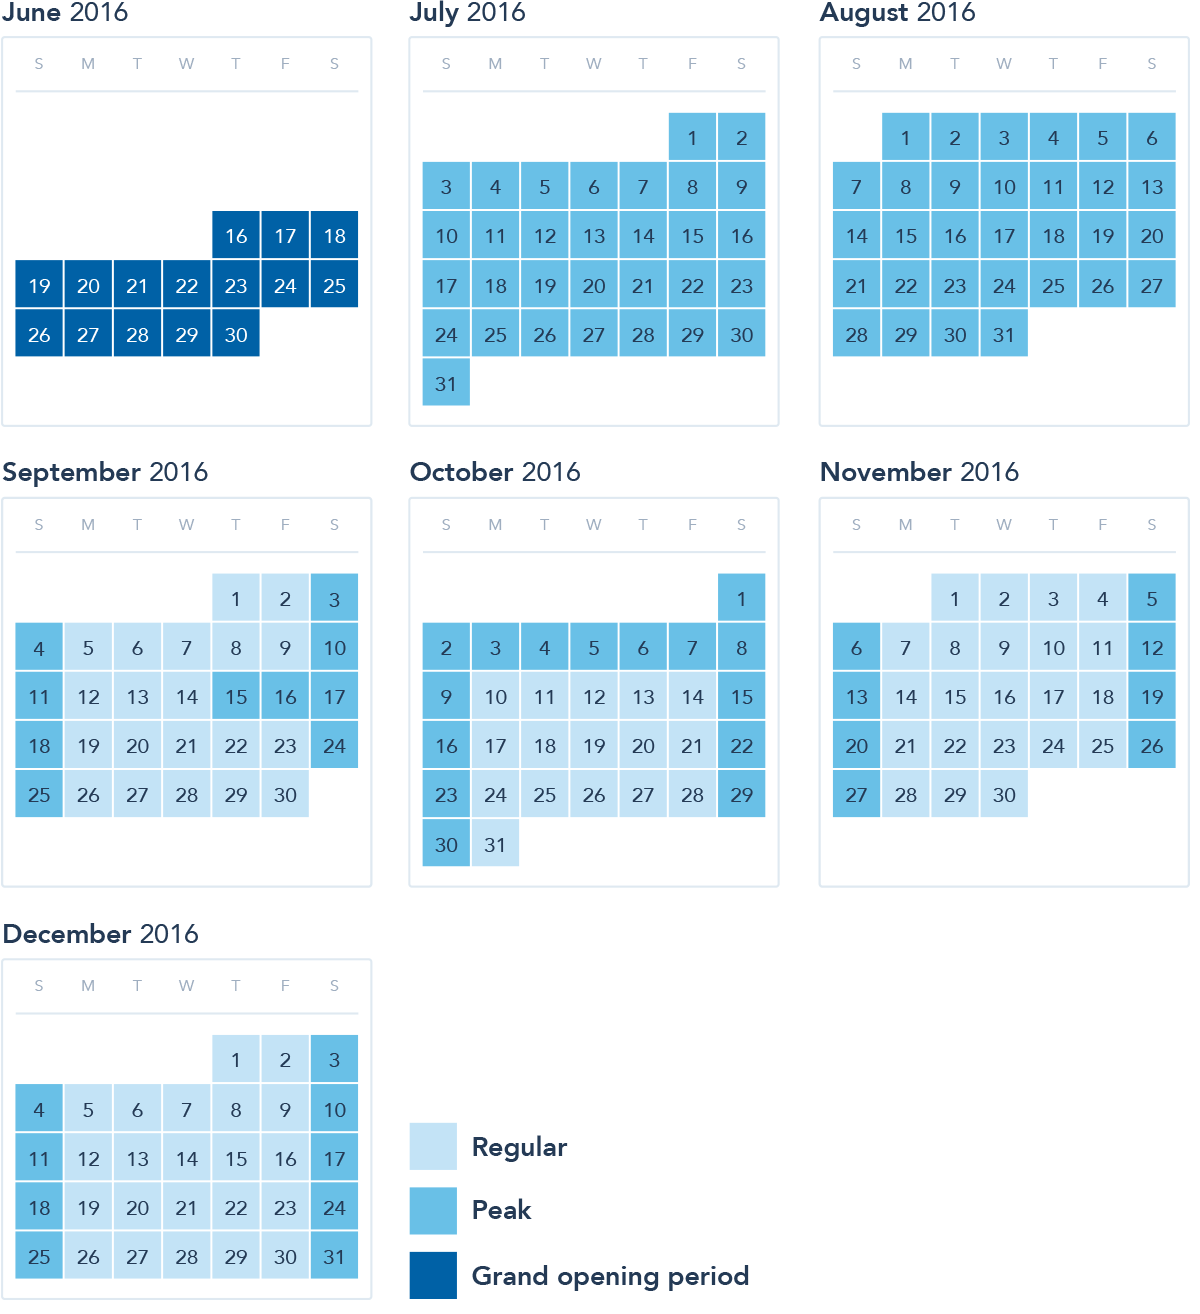 WindowSeat Ticket Pricing Calendar